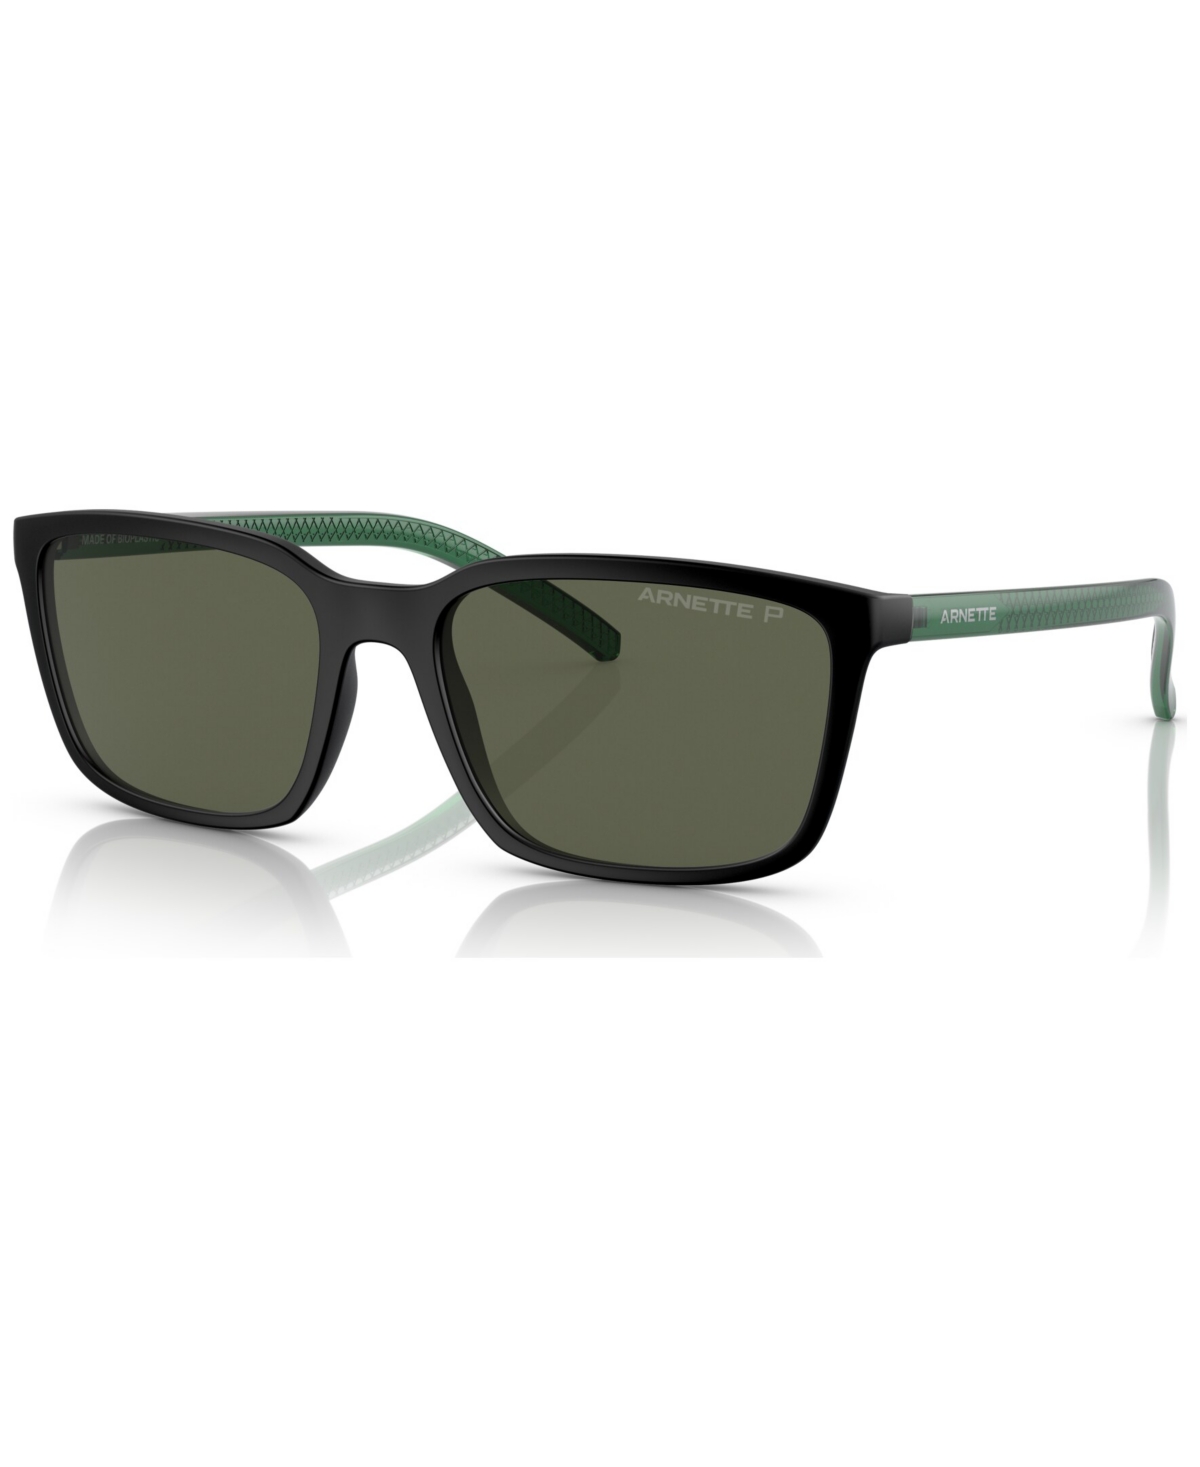 Men's Polarized Sunglasses, AN4311 - Black